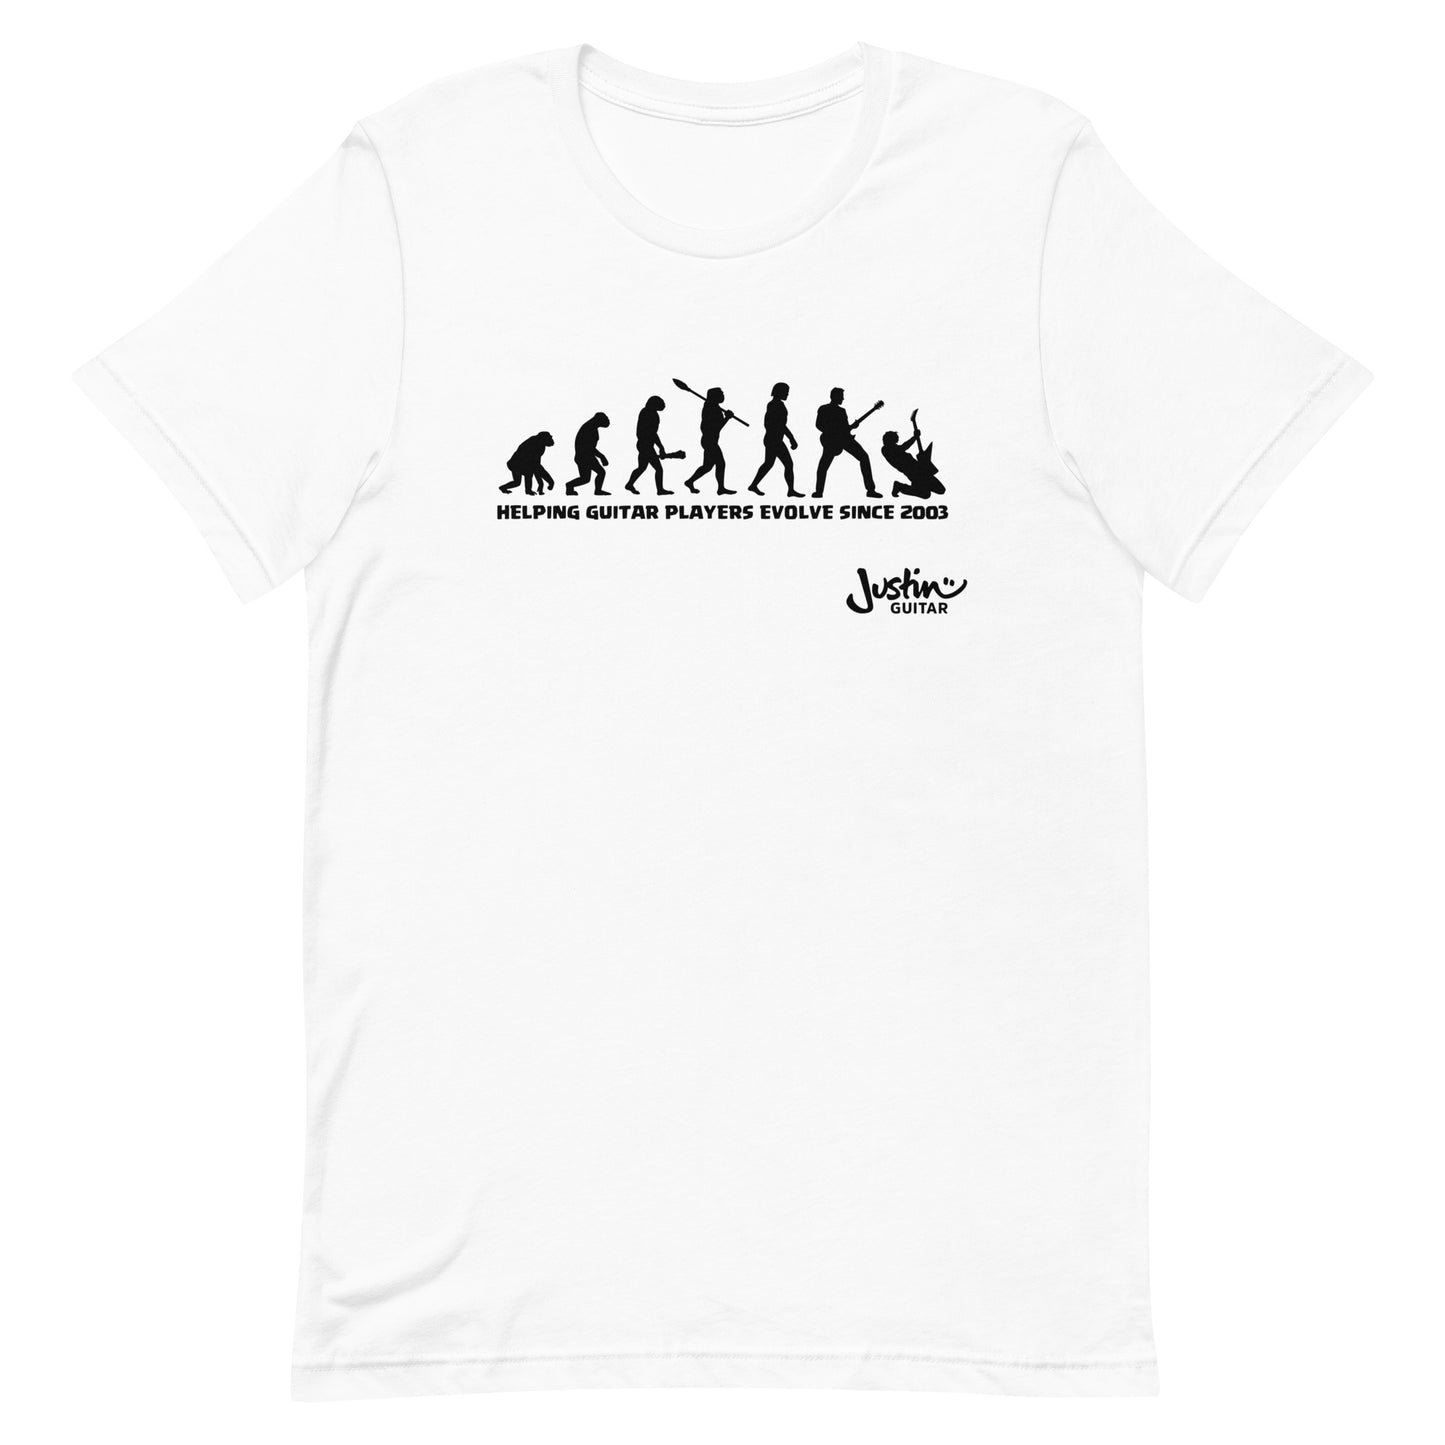 JustinGuitar 20 Years Evolution Limited Edition | Unisex T-shirt